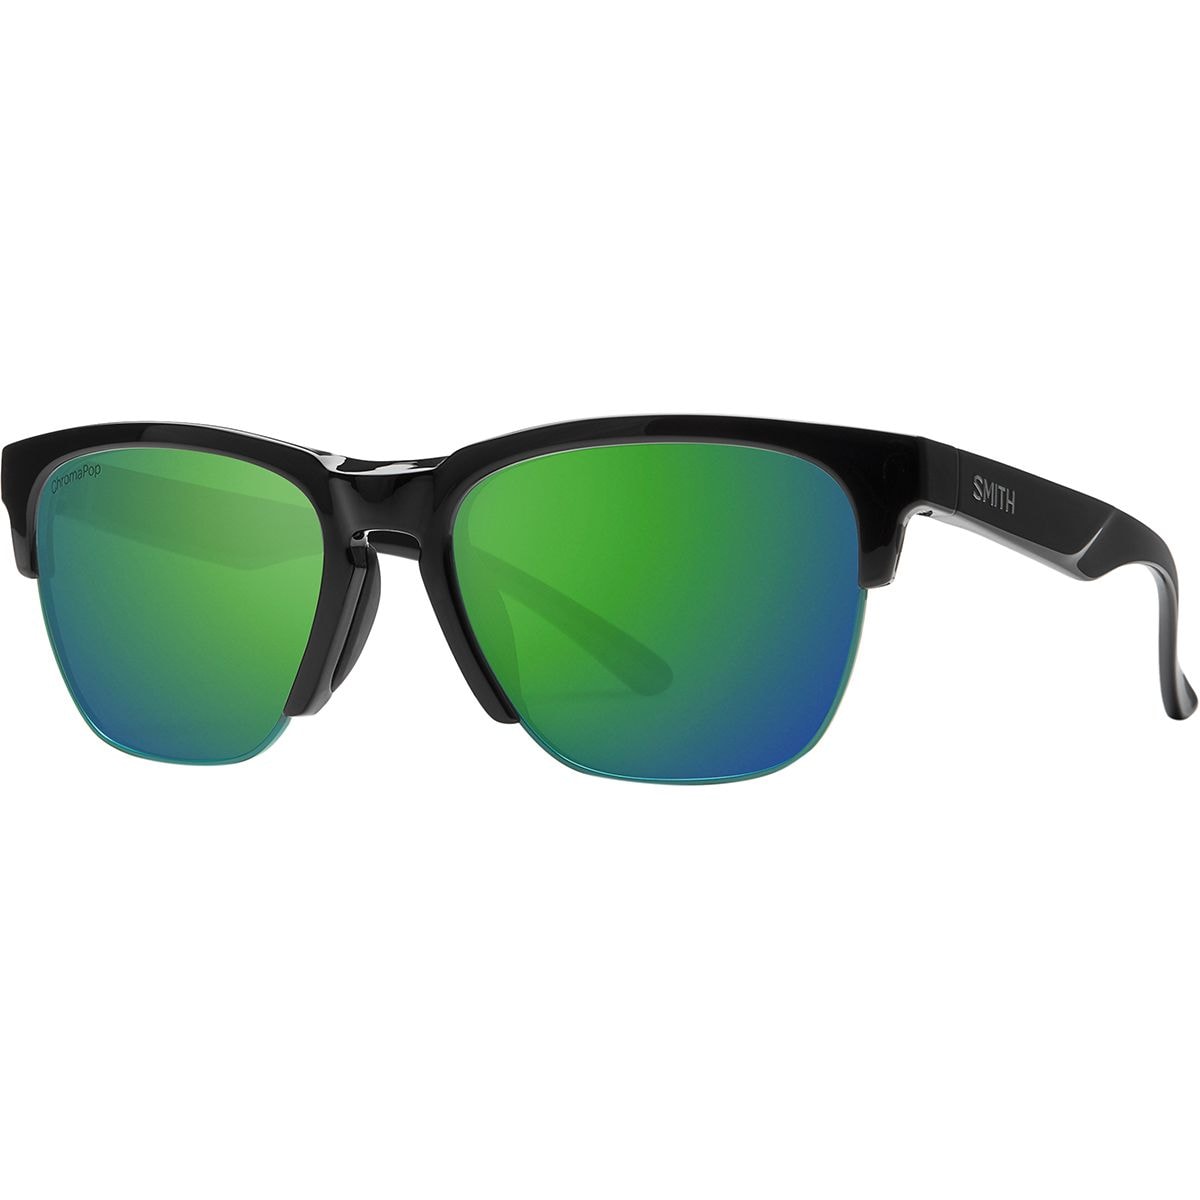 Smith Haywire ChromaPop Sunglasses - Accessories